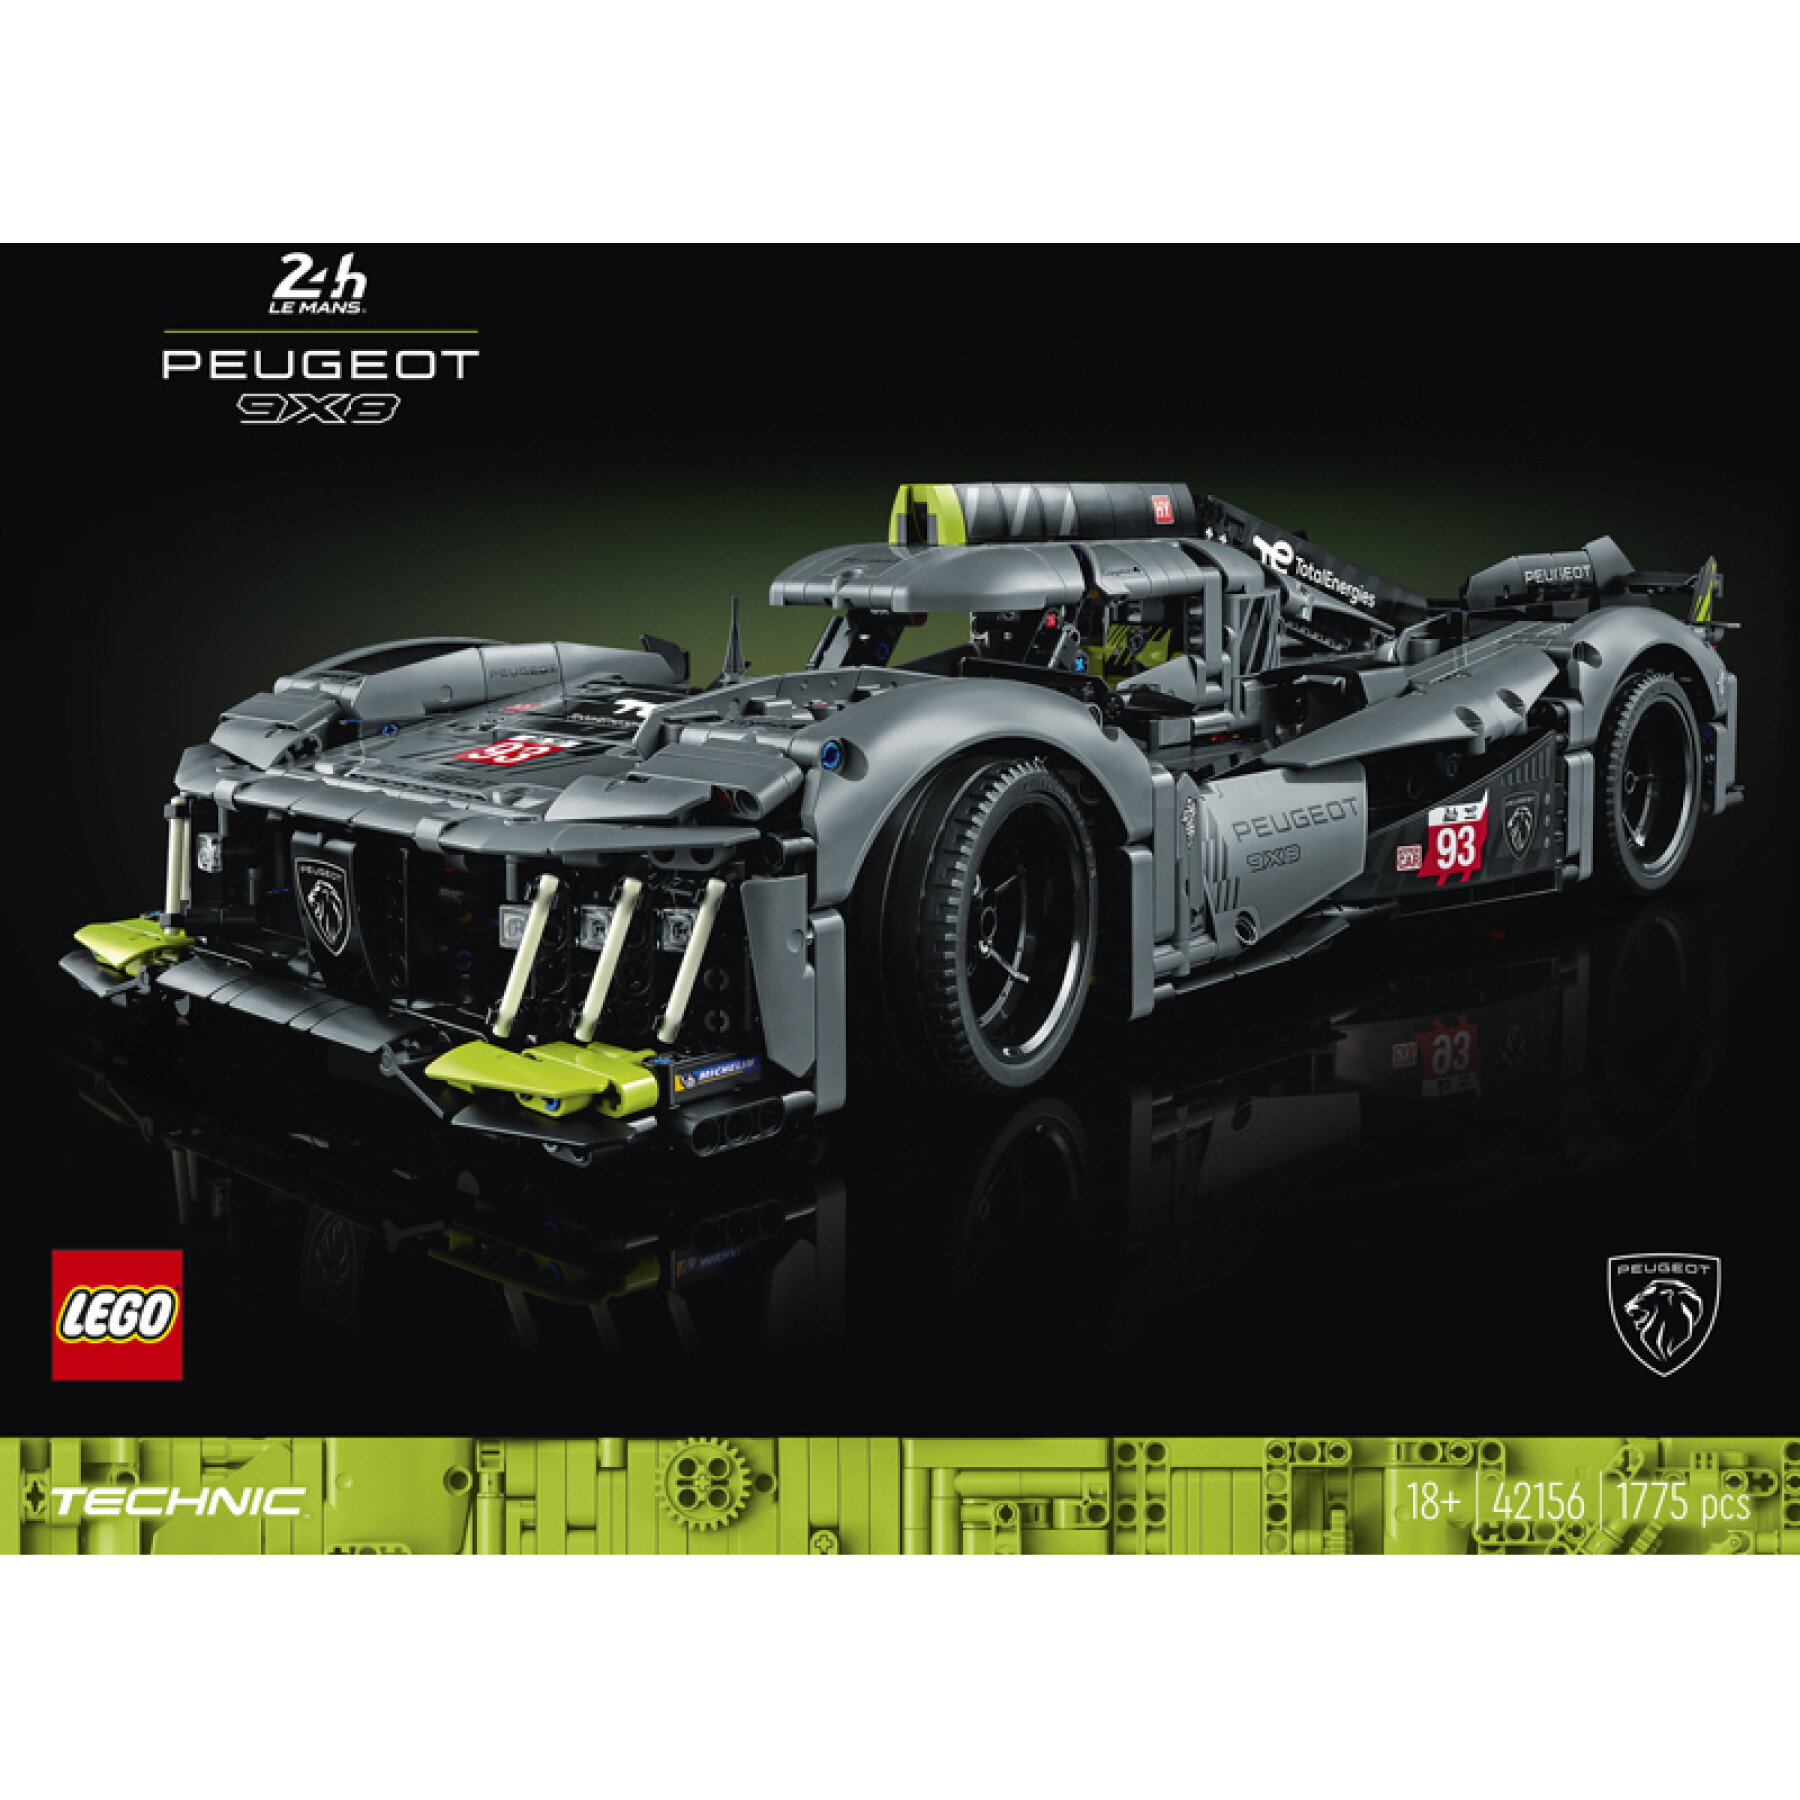 Jogos de carros Lego Peugeot Mans Technic